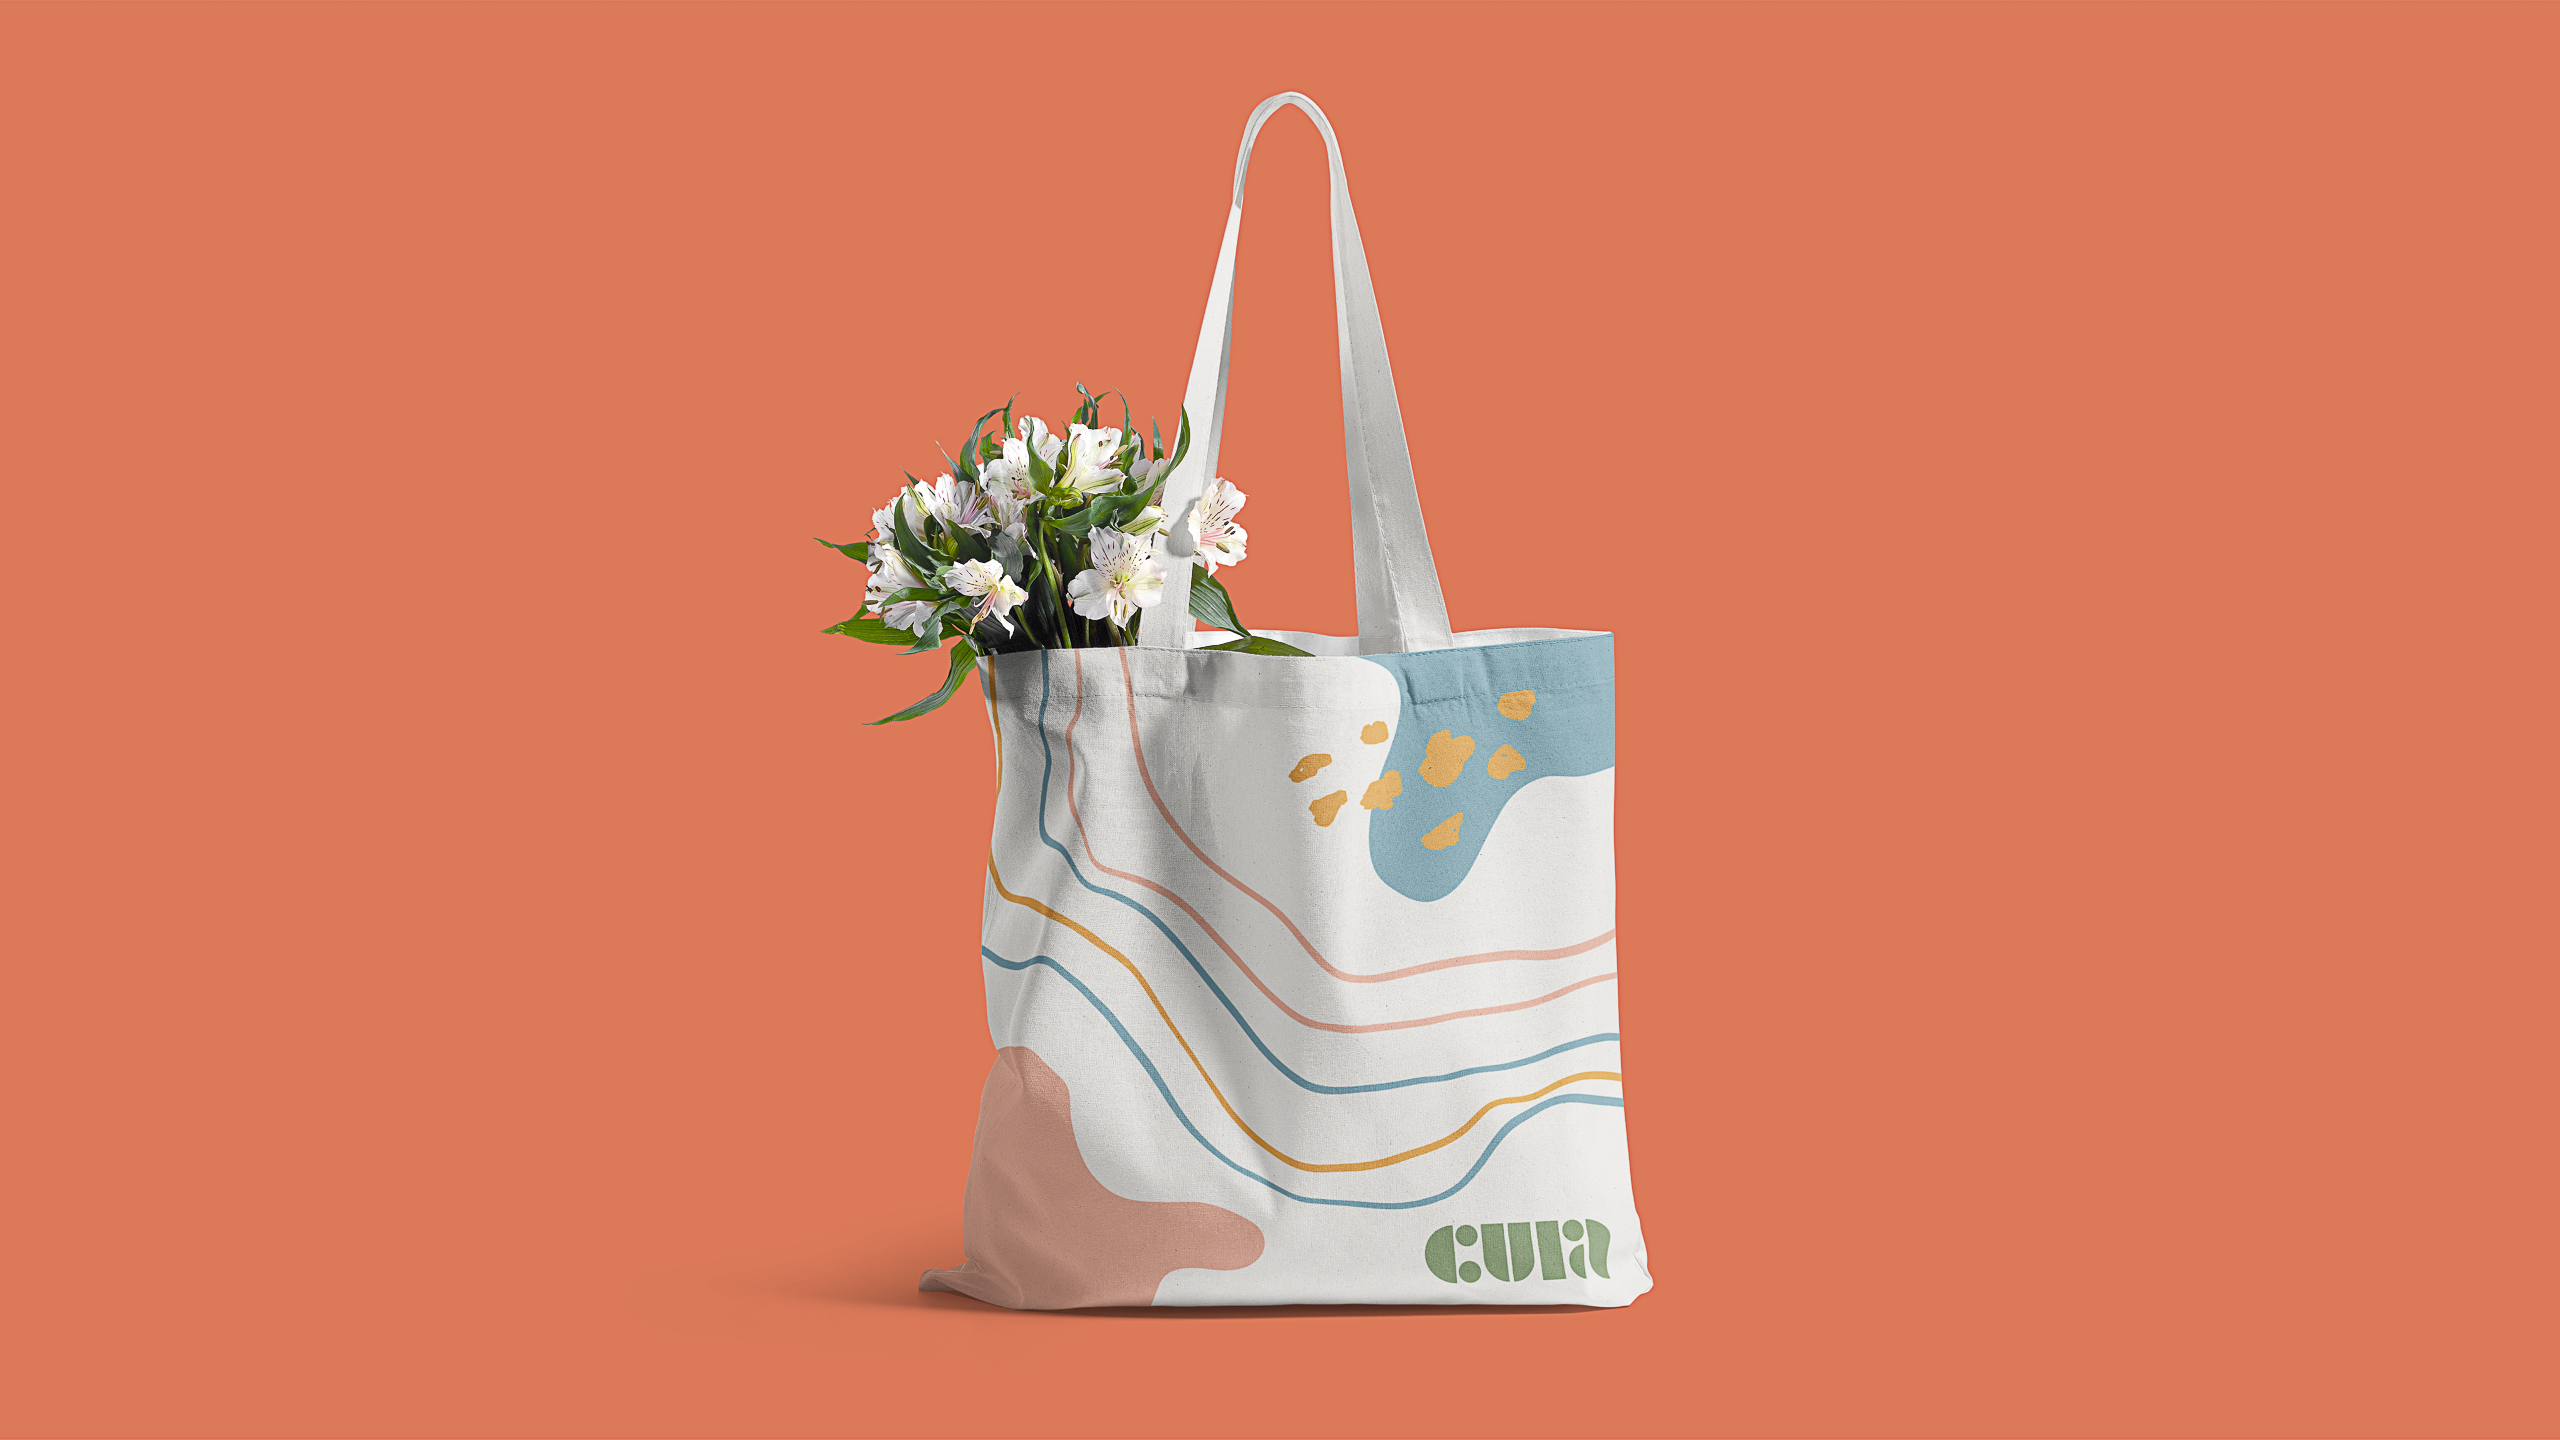 handbag with Cura logo and flowers